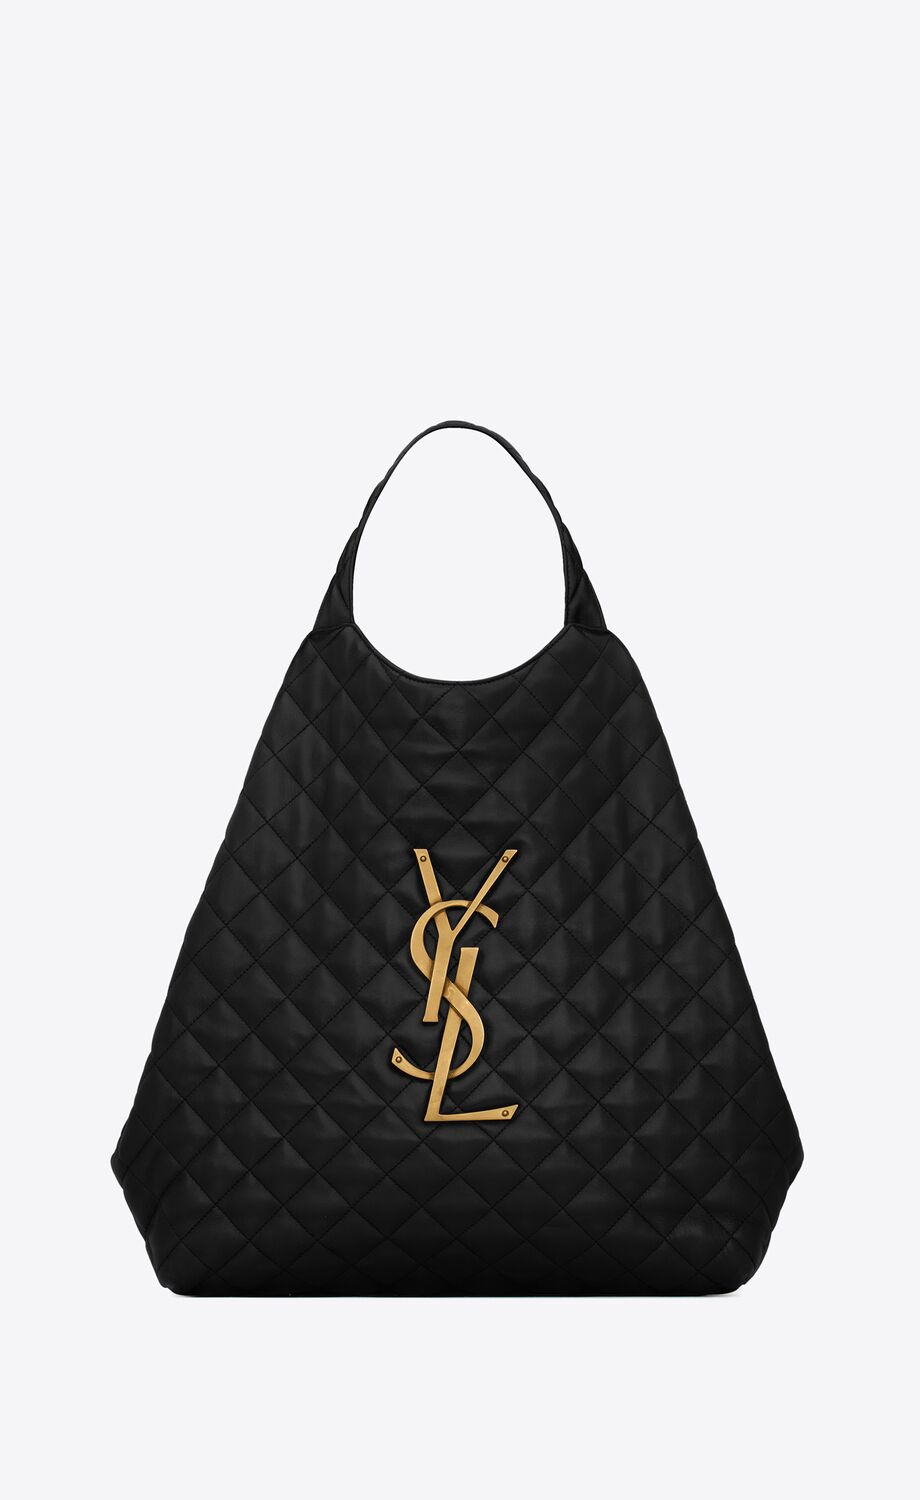 Look: Alexa Ilacad's New Fendi Baguette Bag